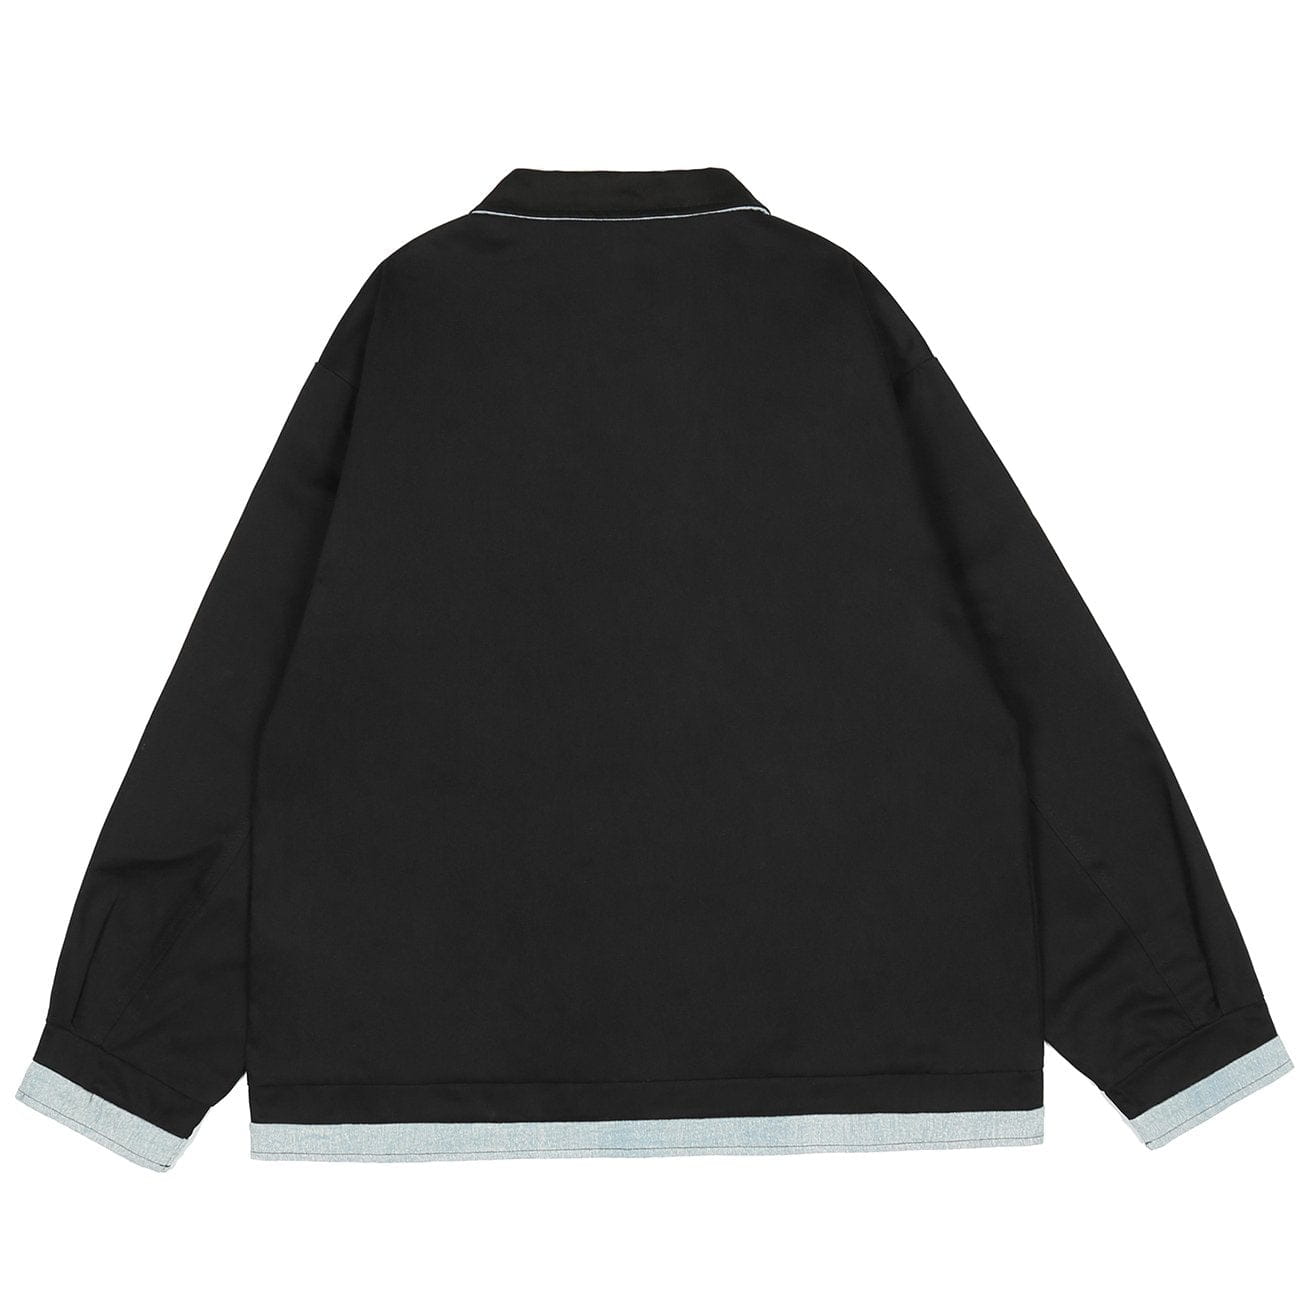 Majesda® - Contrasting Color Pocket Labeling Jacket outfit ideas, streetwear fashion - majesda.com